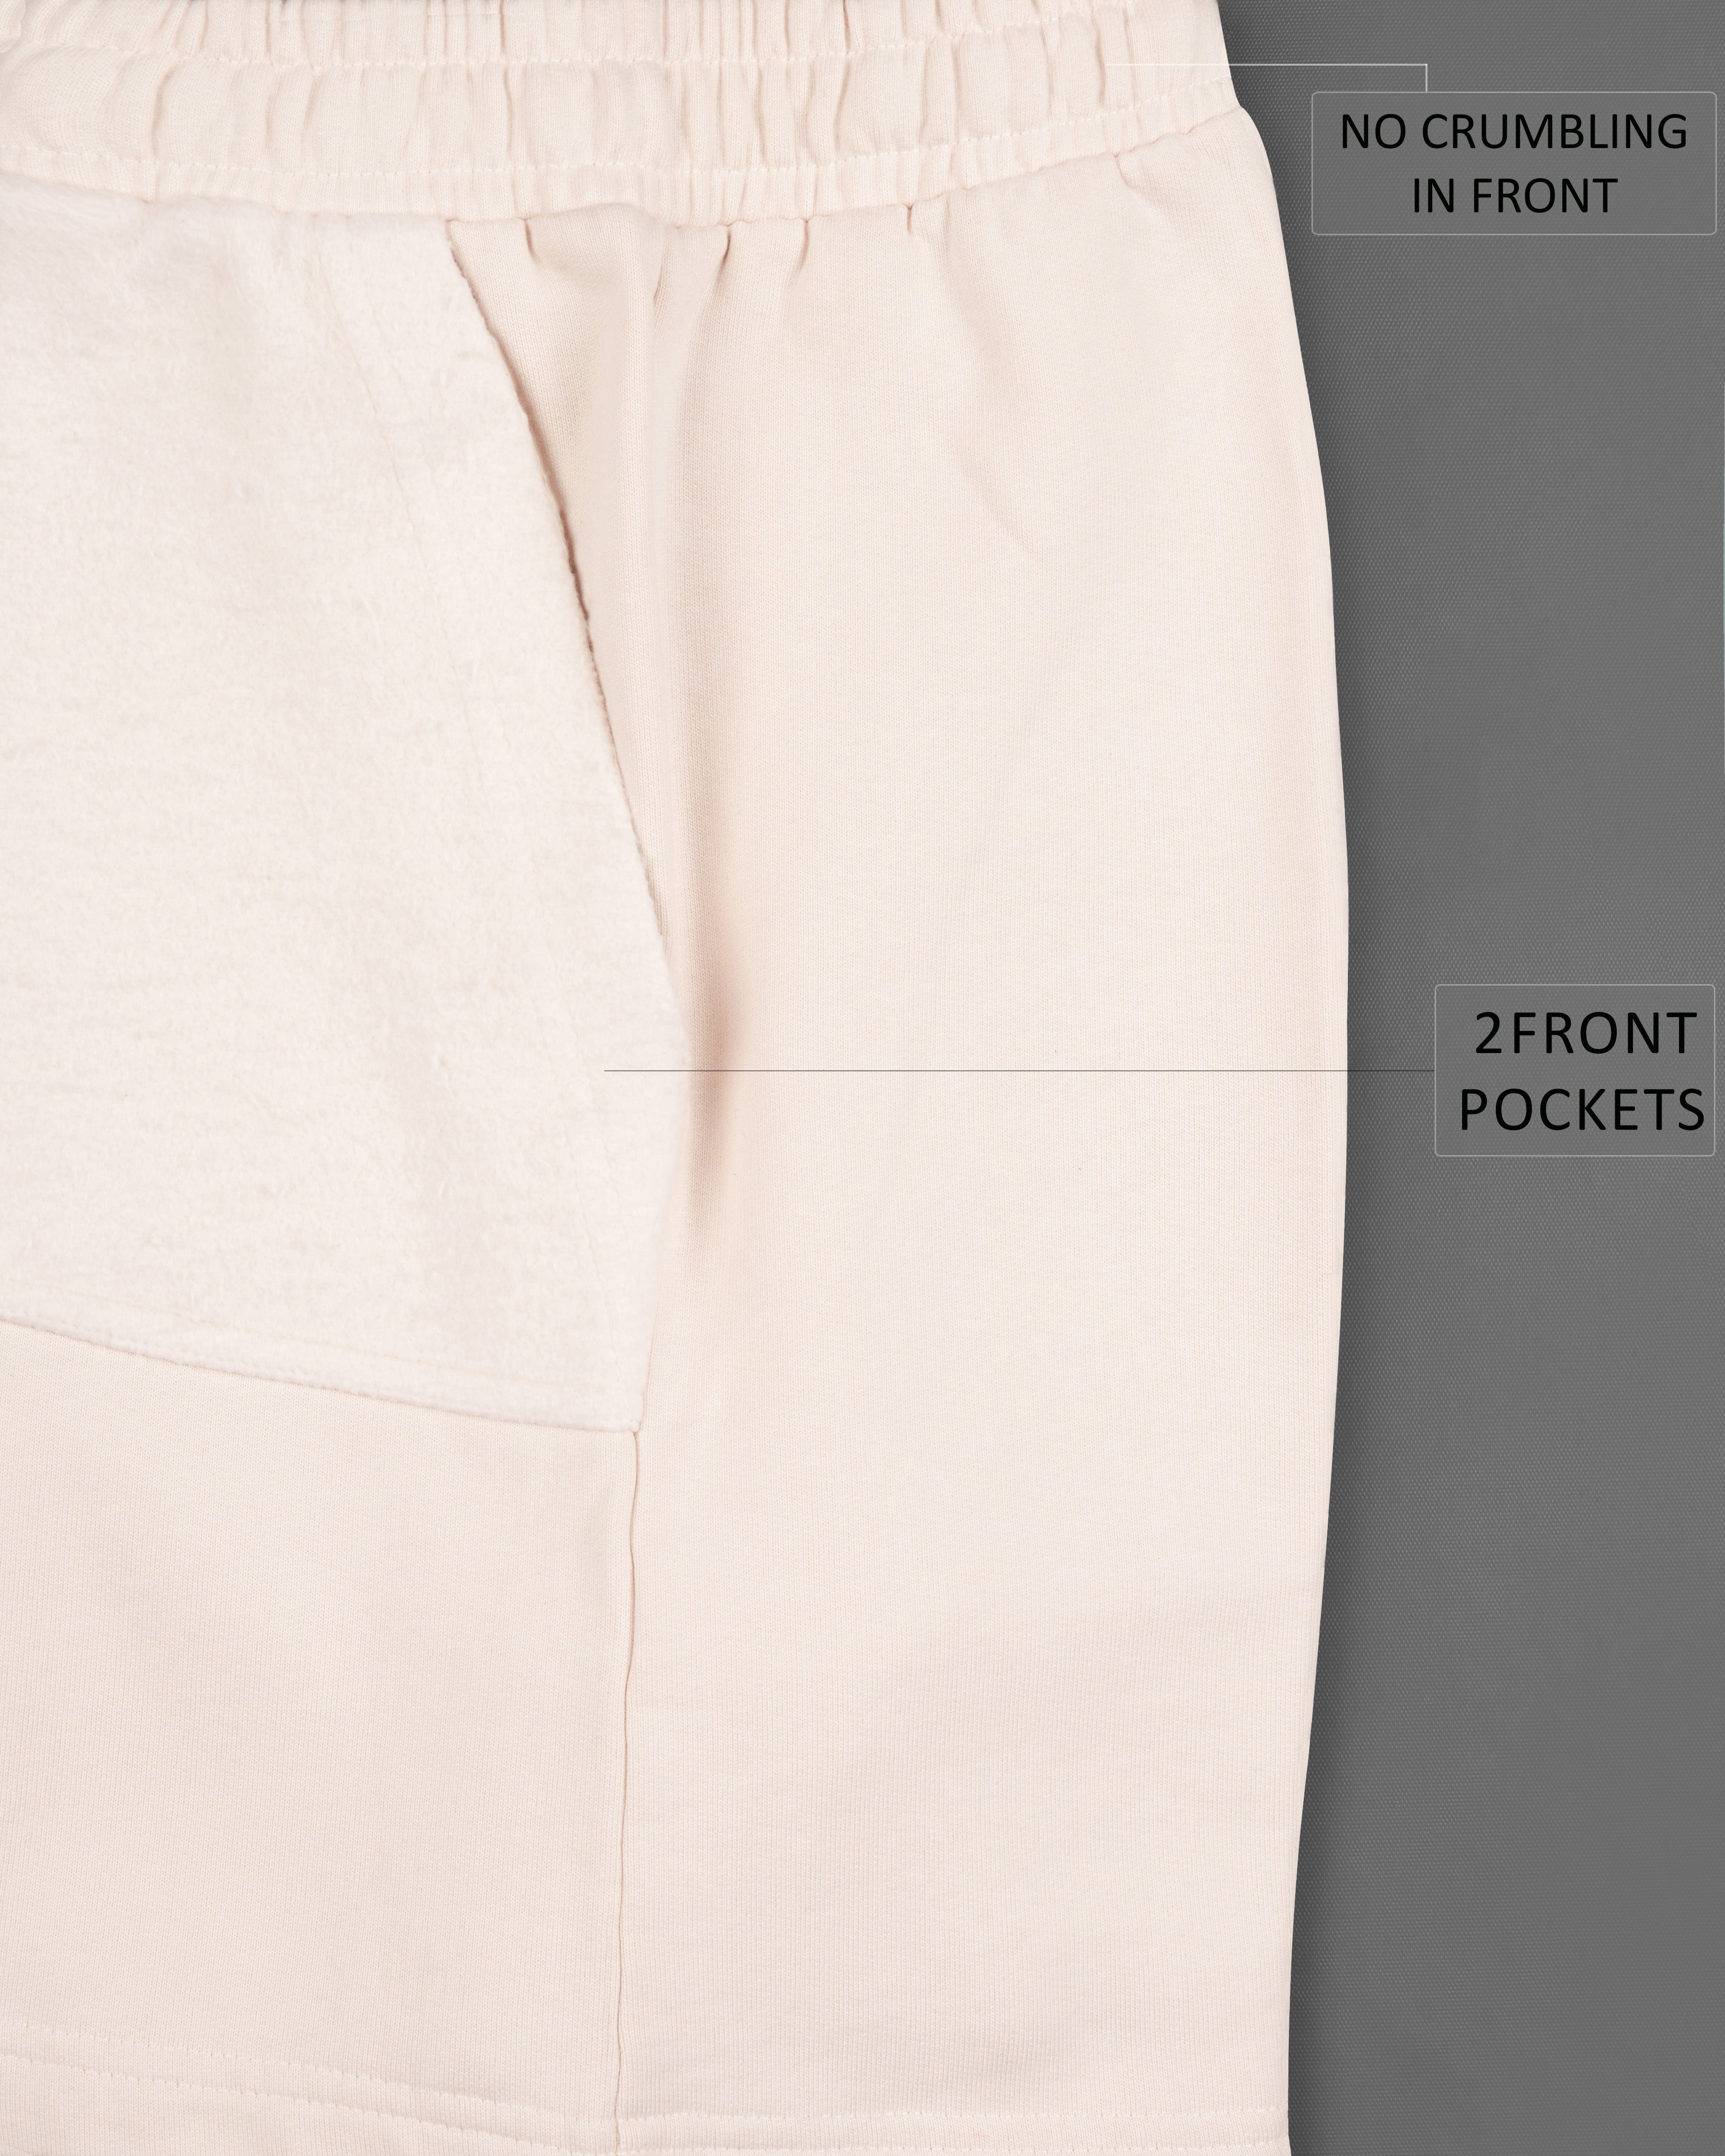 Bizarre Cream Premium Cotton Sweatshirt with Shorts Combo TS621-SR183-S, TS621-SR183-M, TS621-SR183-L, TS621-SR183-XL, TS621-SR183-XXL